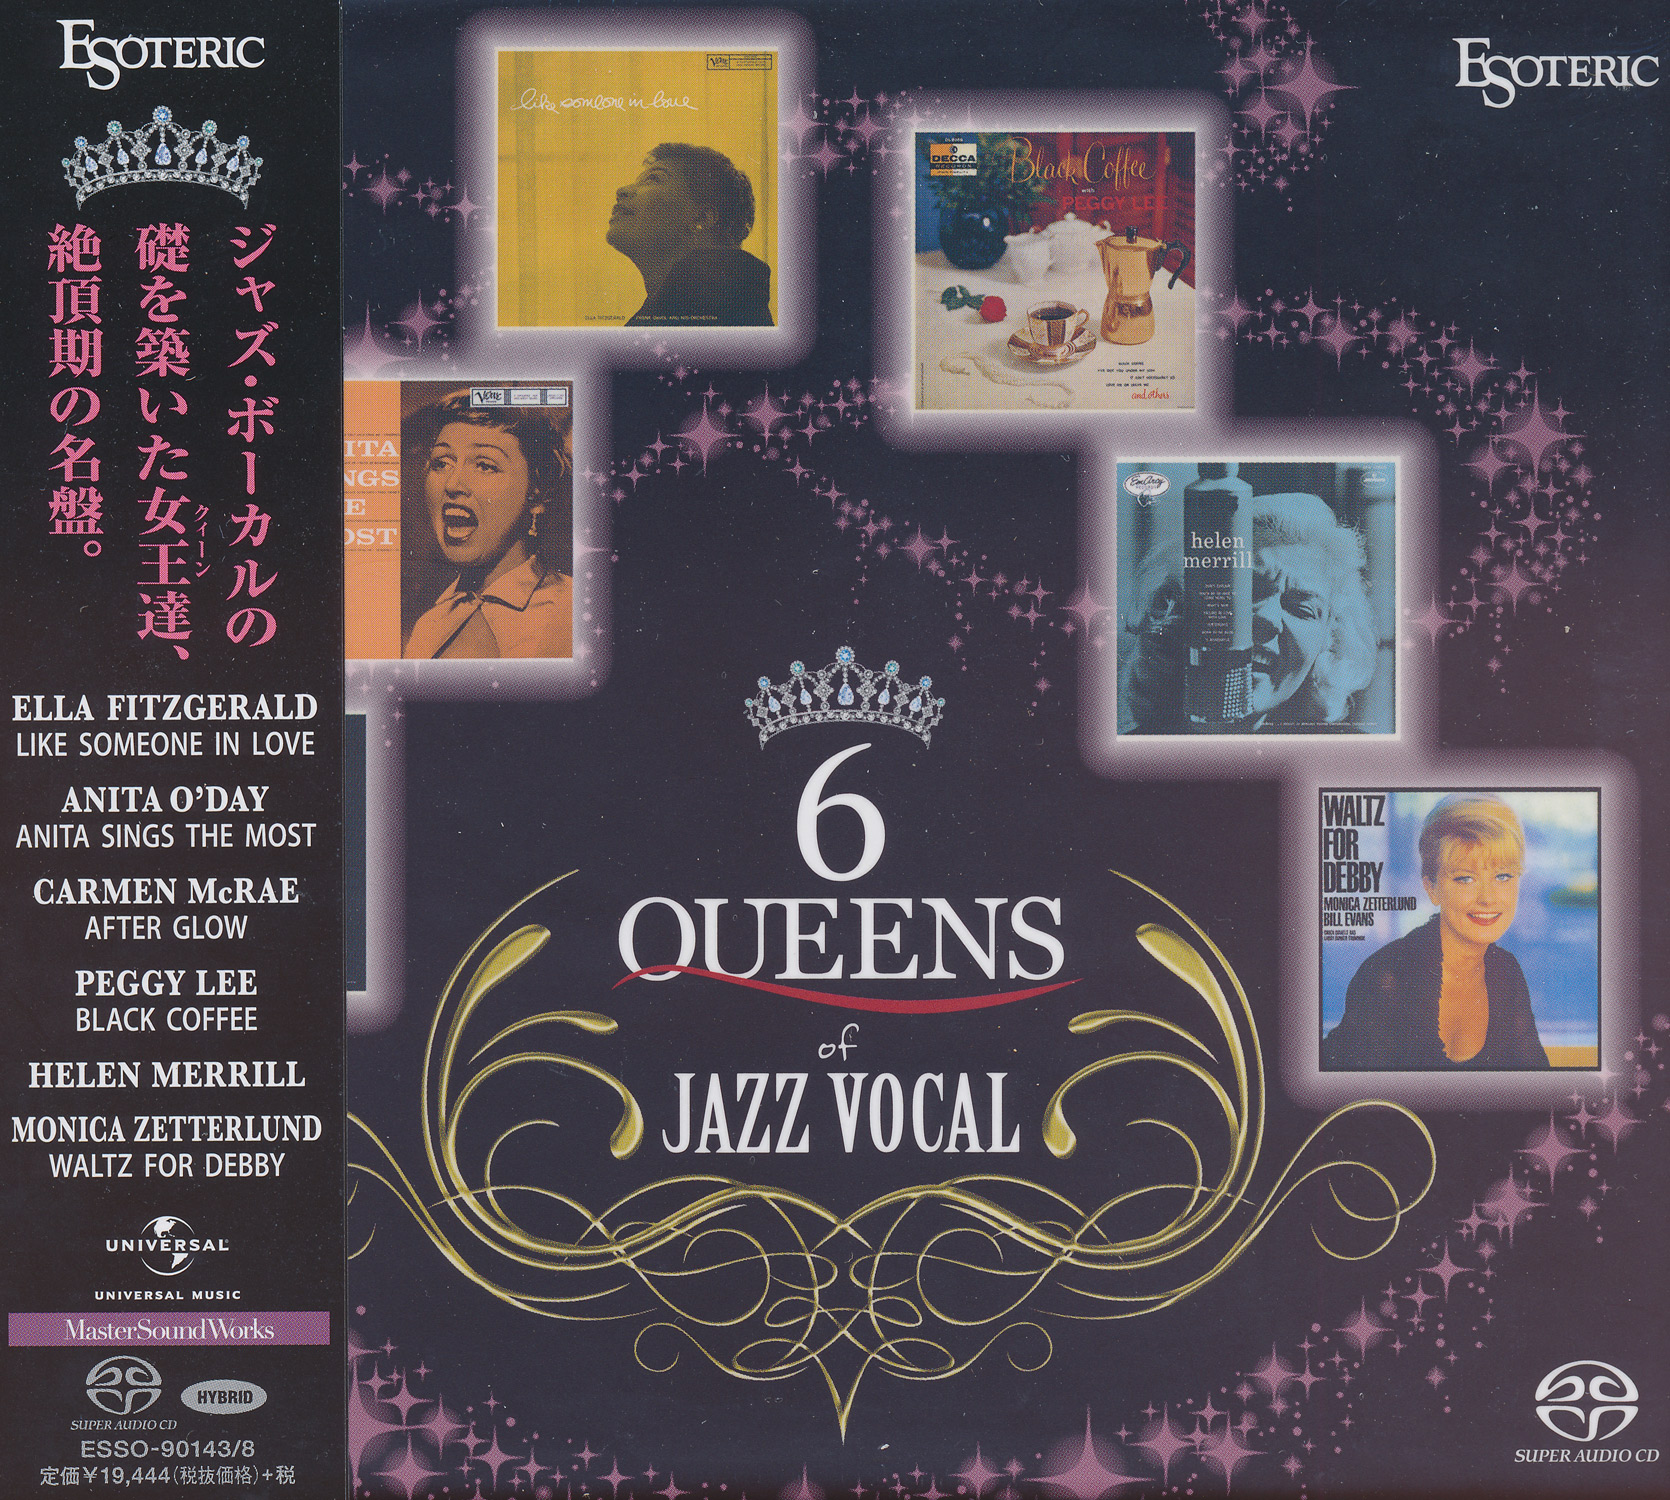 Various Artists - Six Queens Of Jazz Vocal (2016) [Esoteric Japan] (6x SACD Box Set) SACD ISO + FLAC 24bit/96kHz